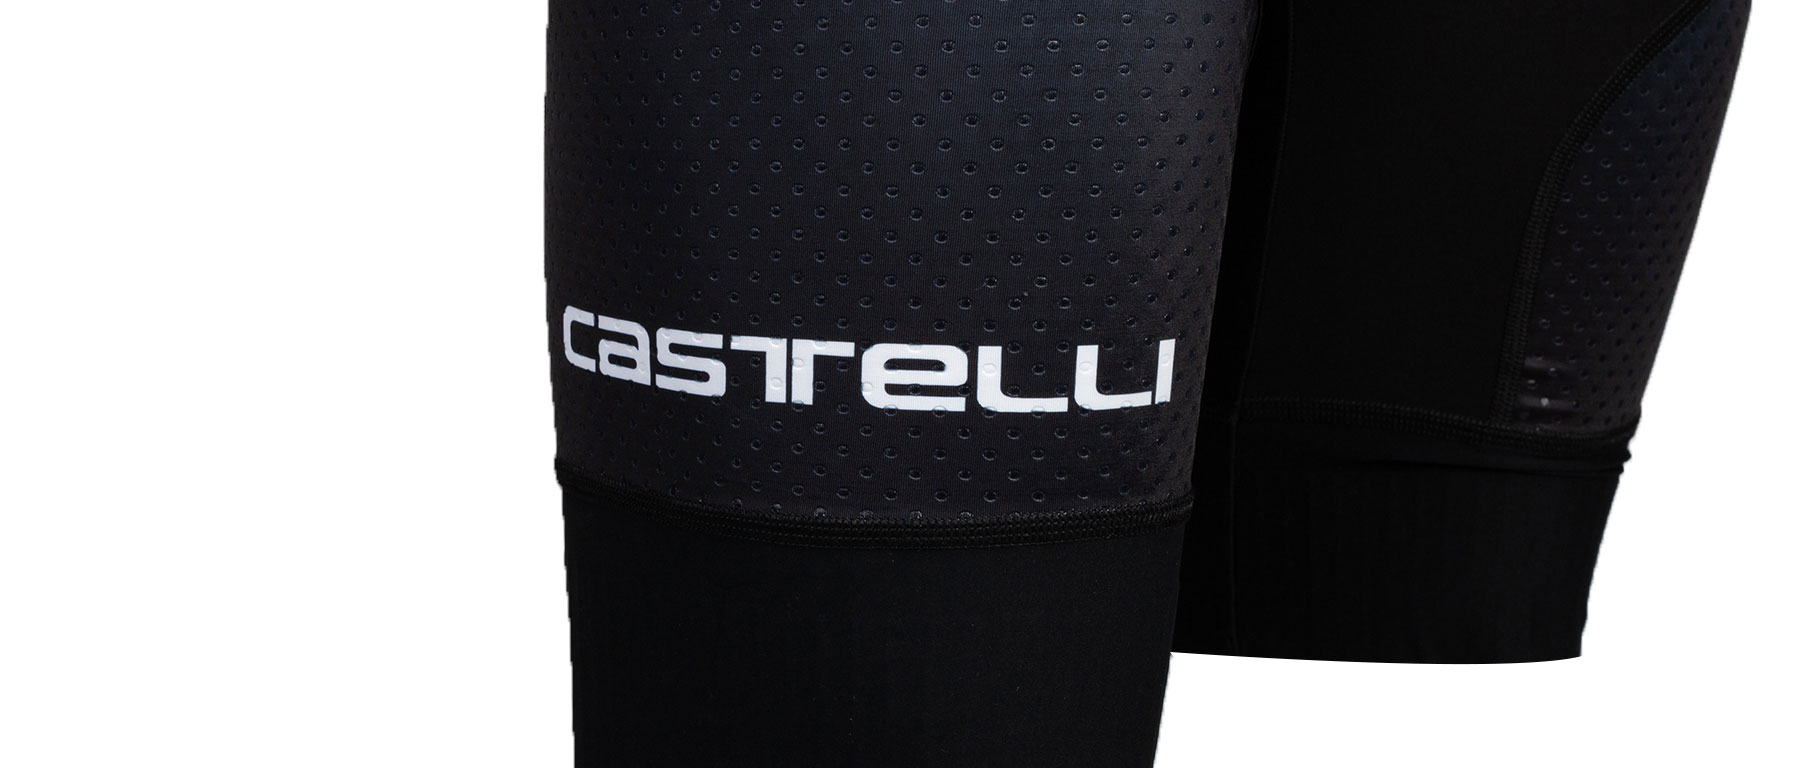 Castelli Free Aero Race 4 Team Bib Shorts